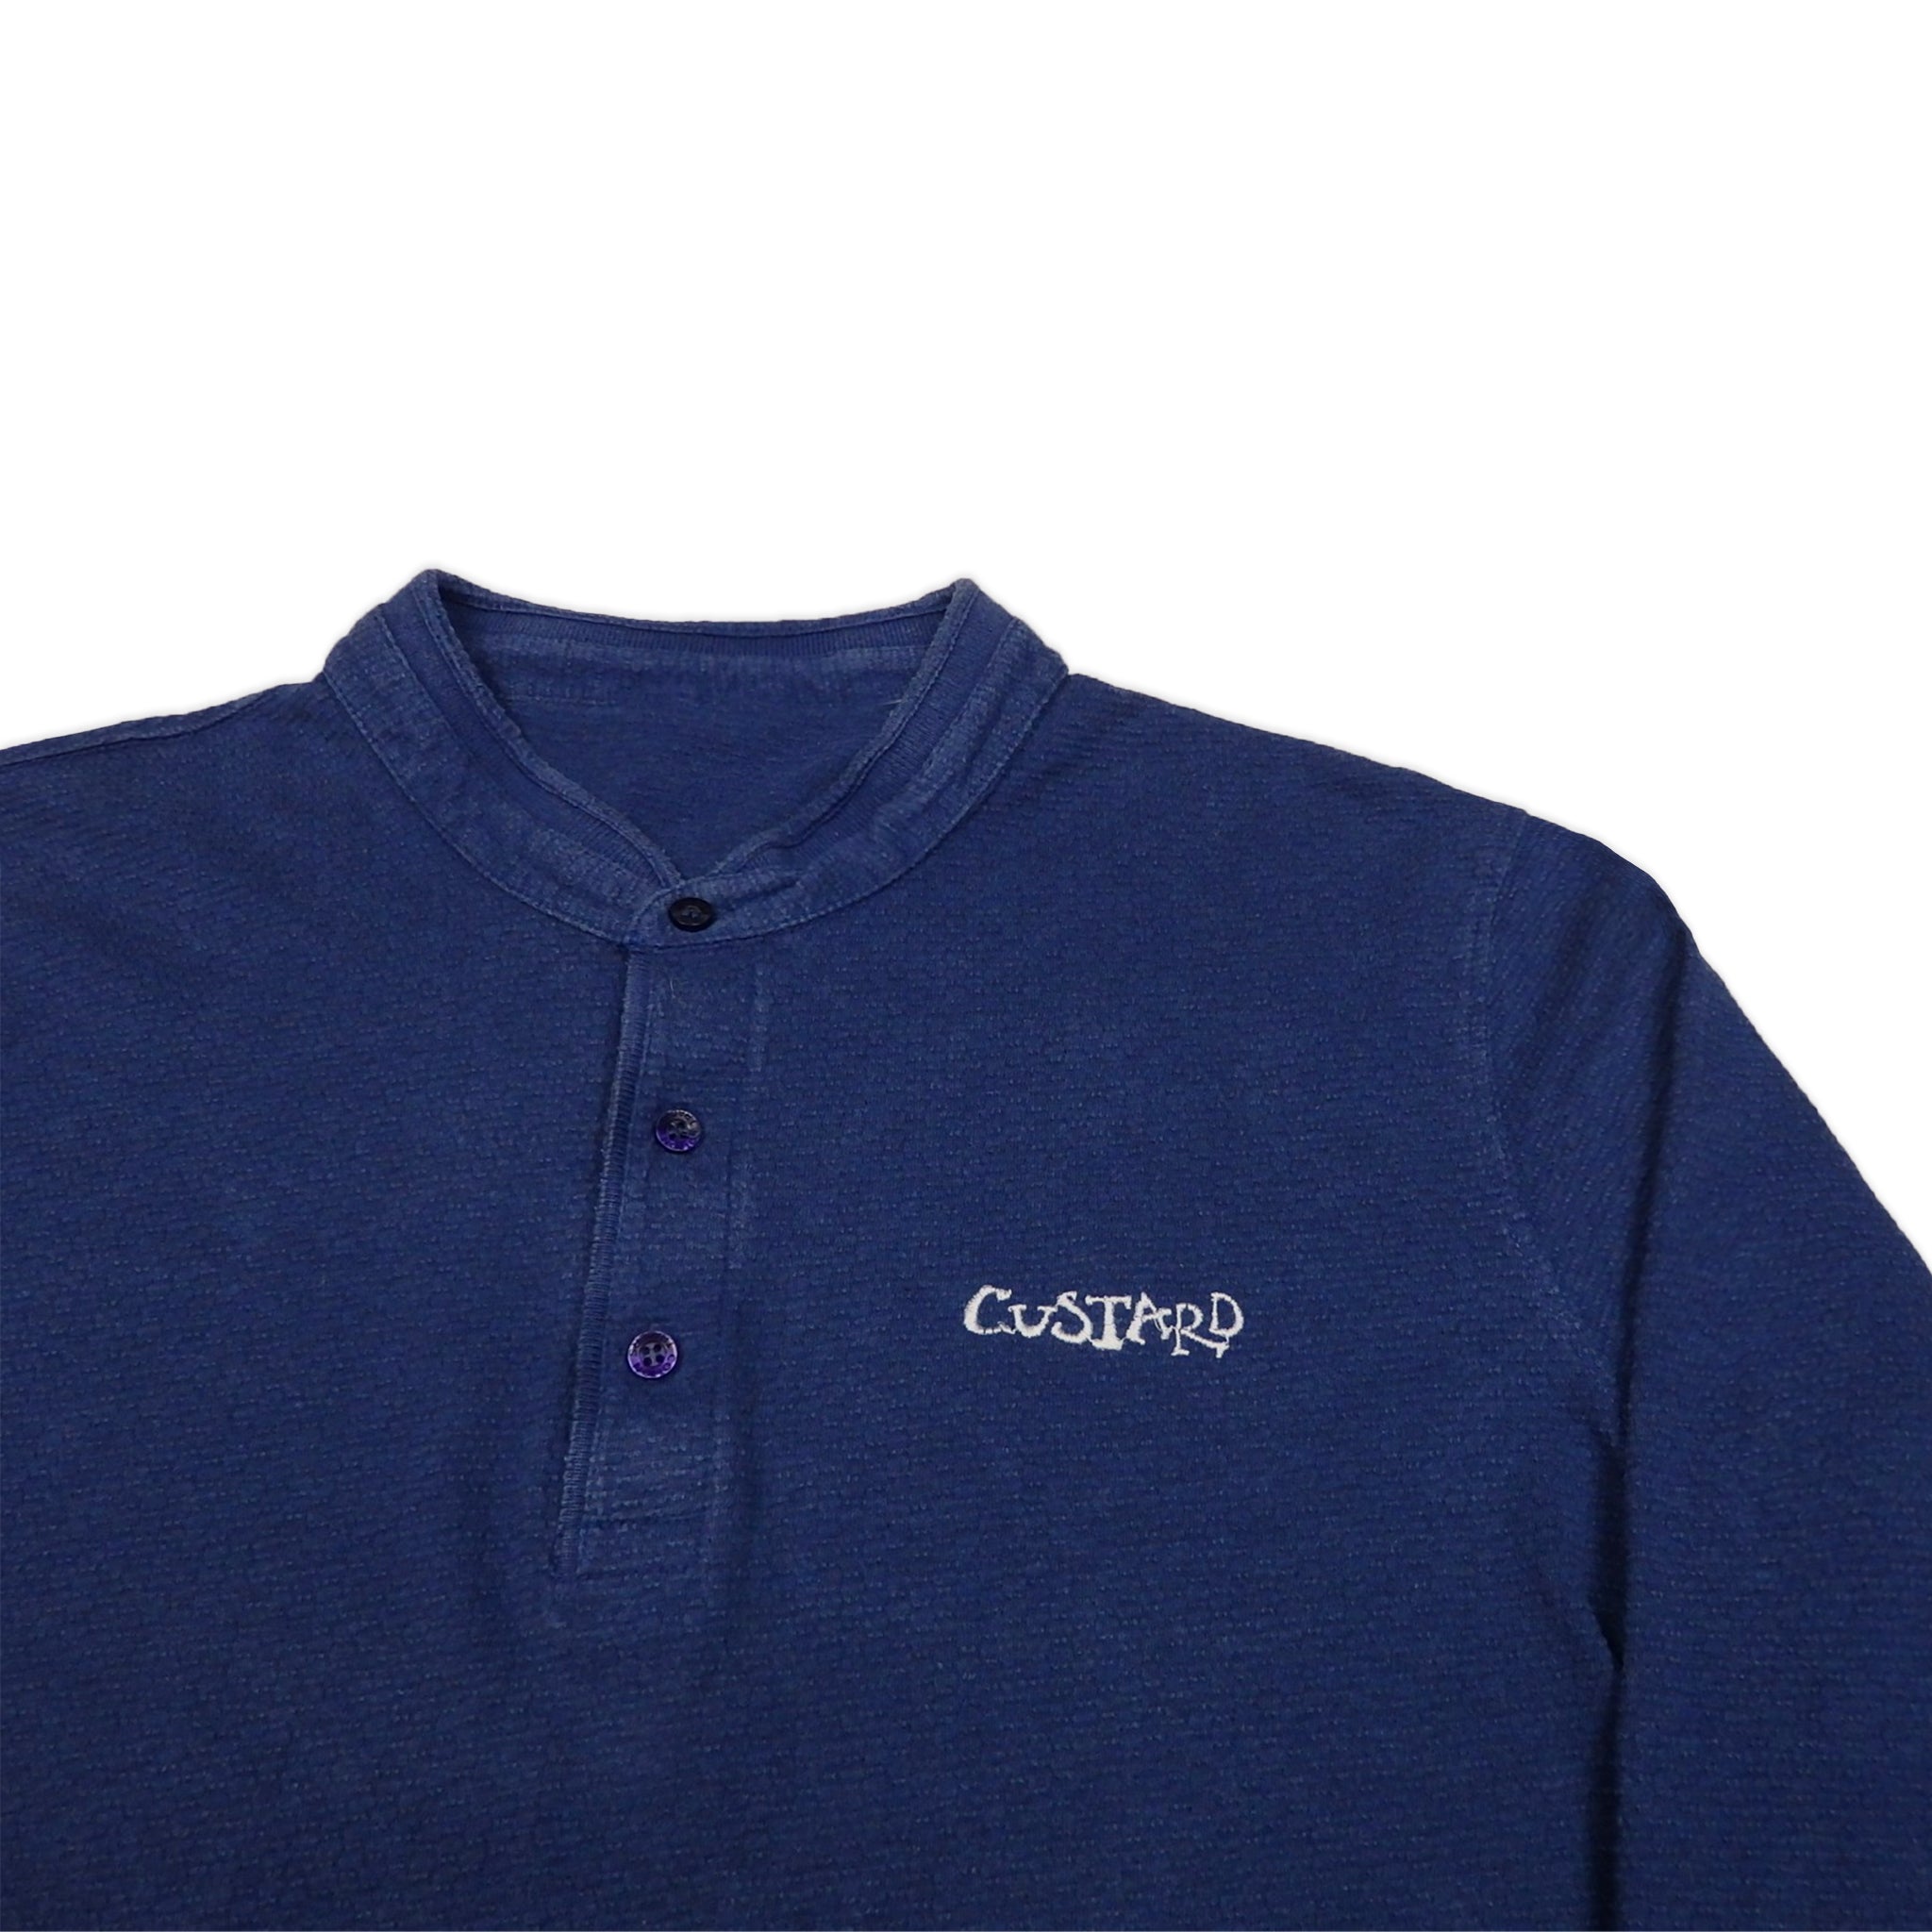 Custard Reclaimed Navy Linen Shirt | Size Medium